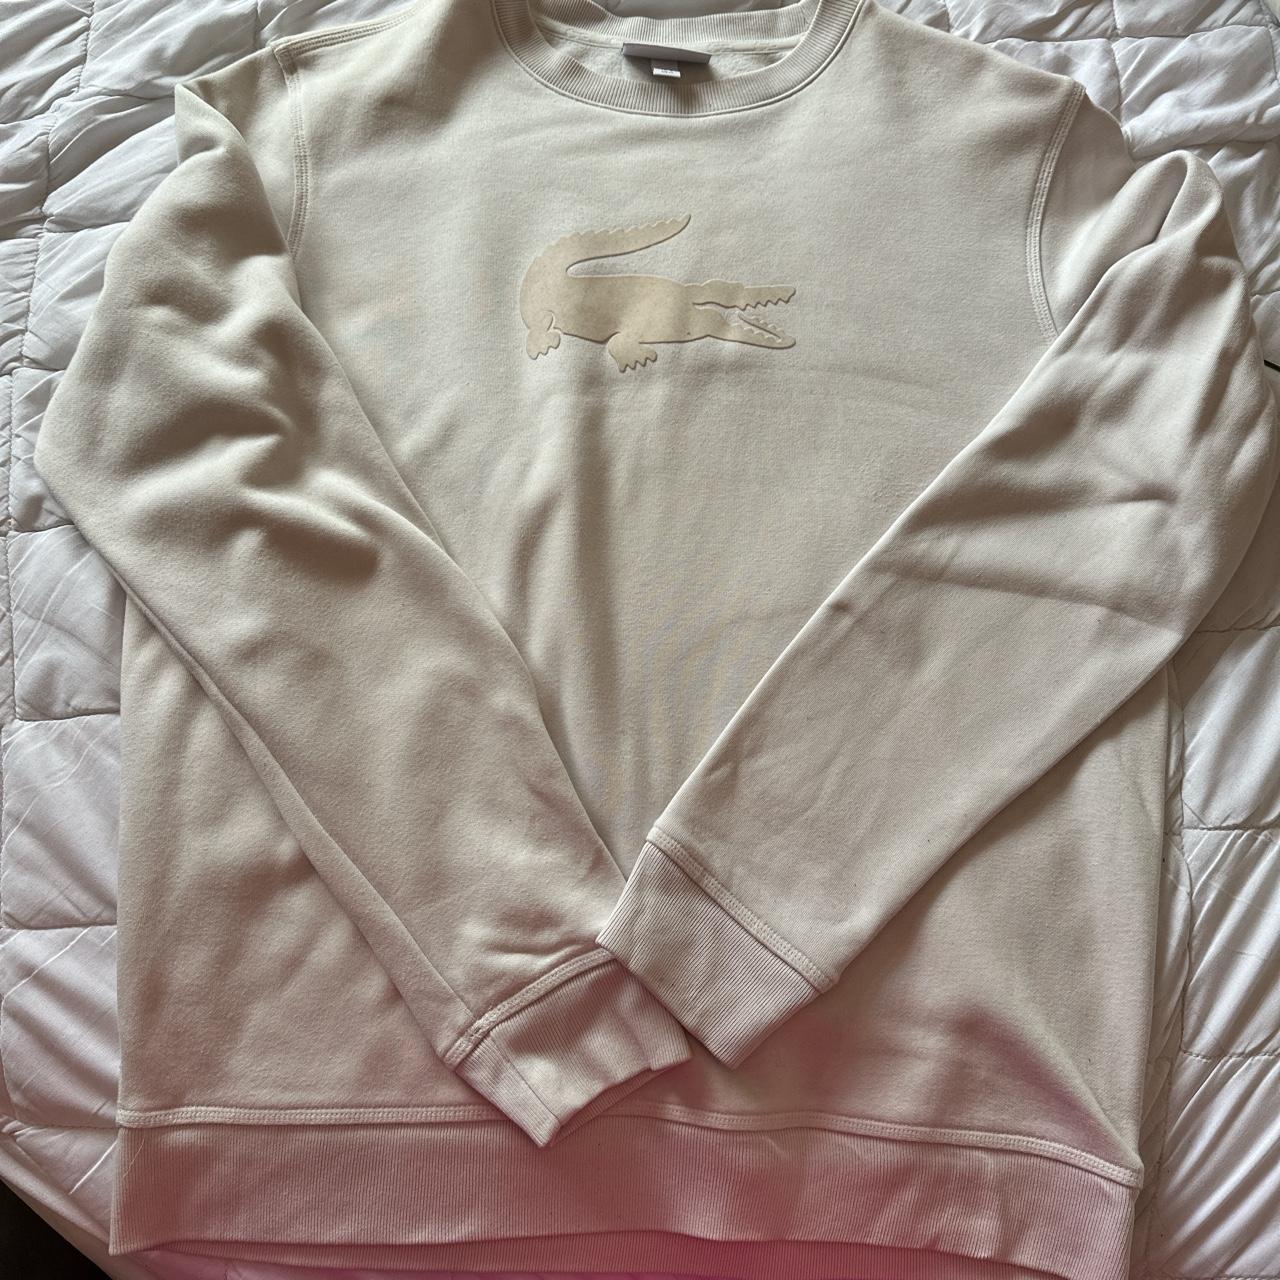 Lacoste sweater Sweatshirt Cream/white Size M... - Depop